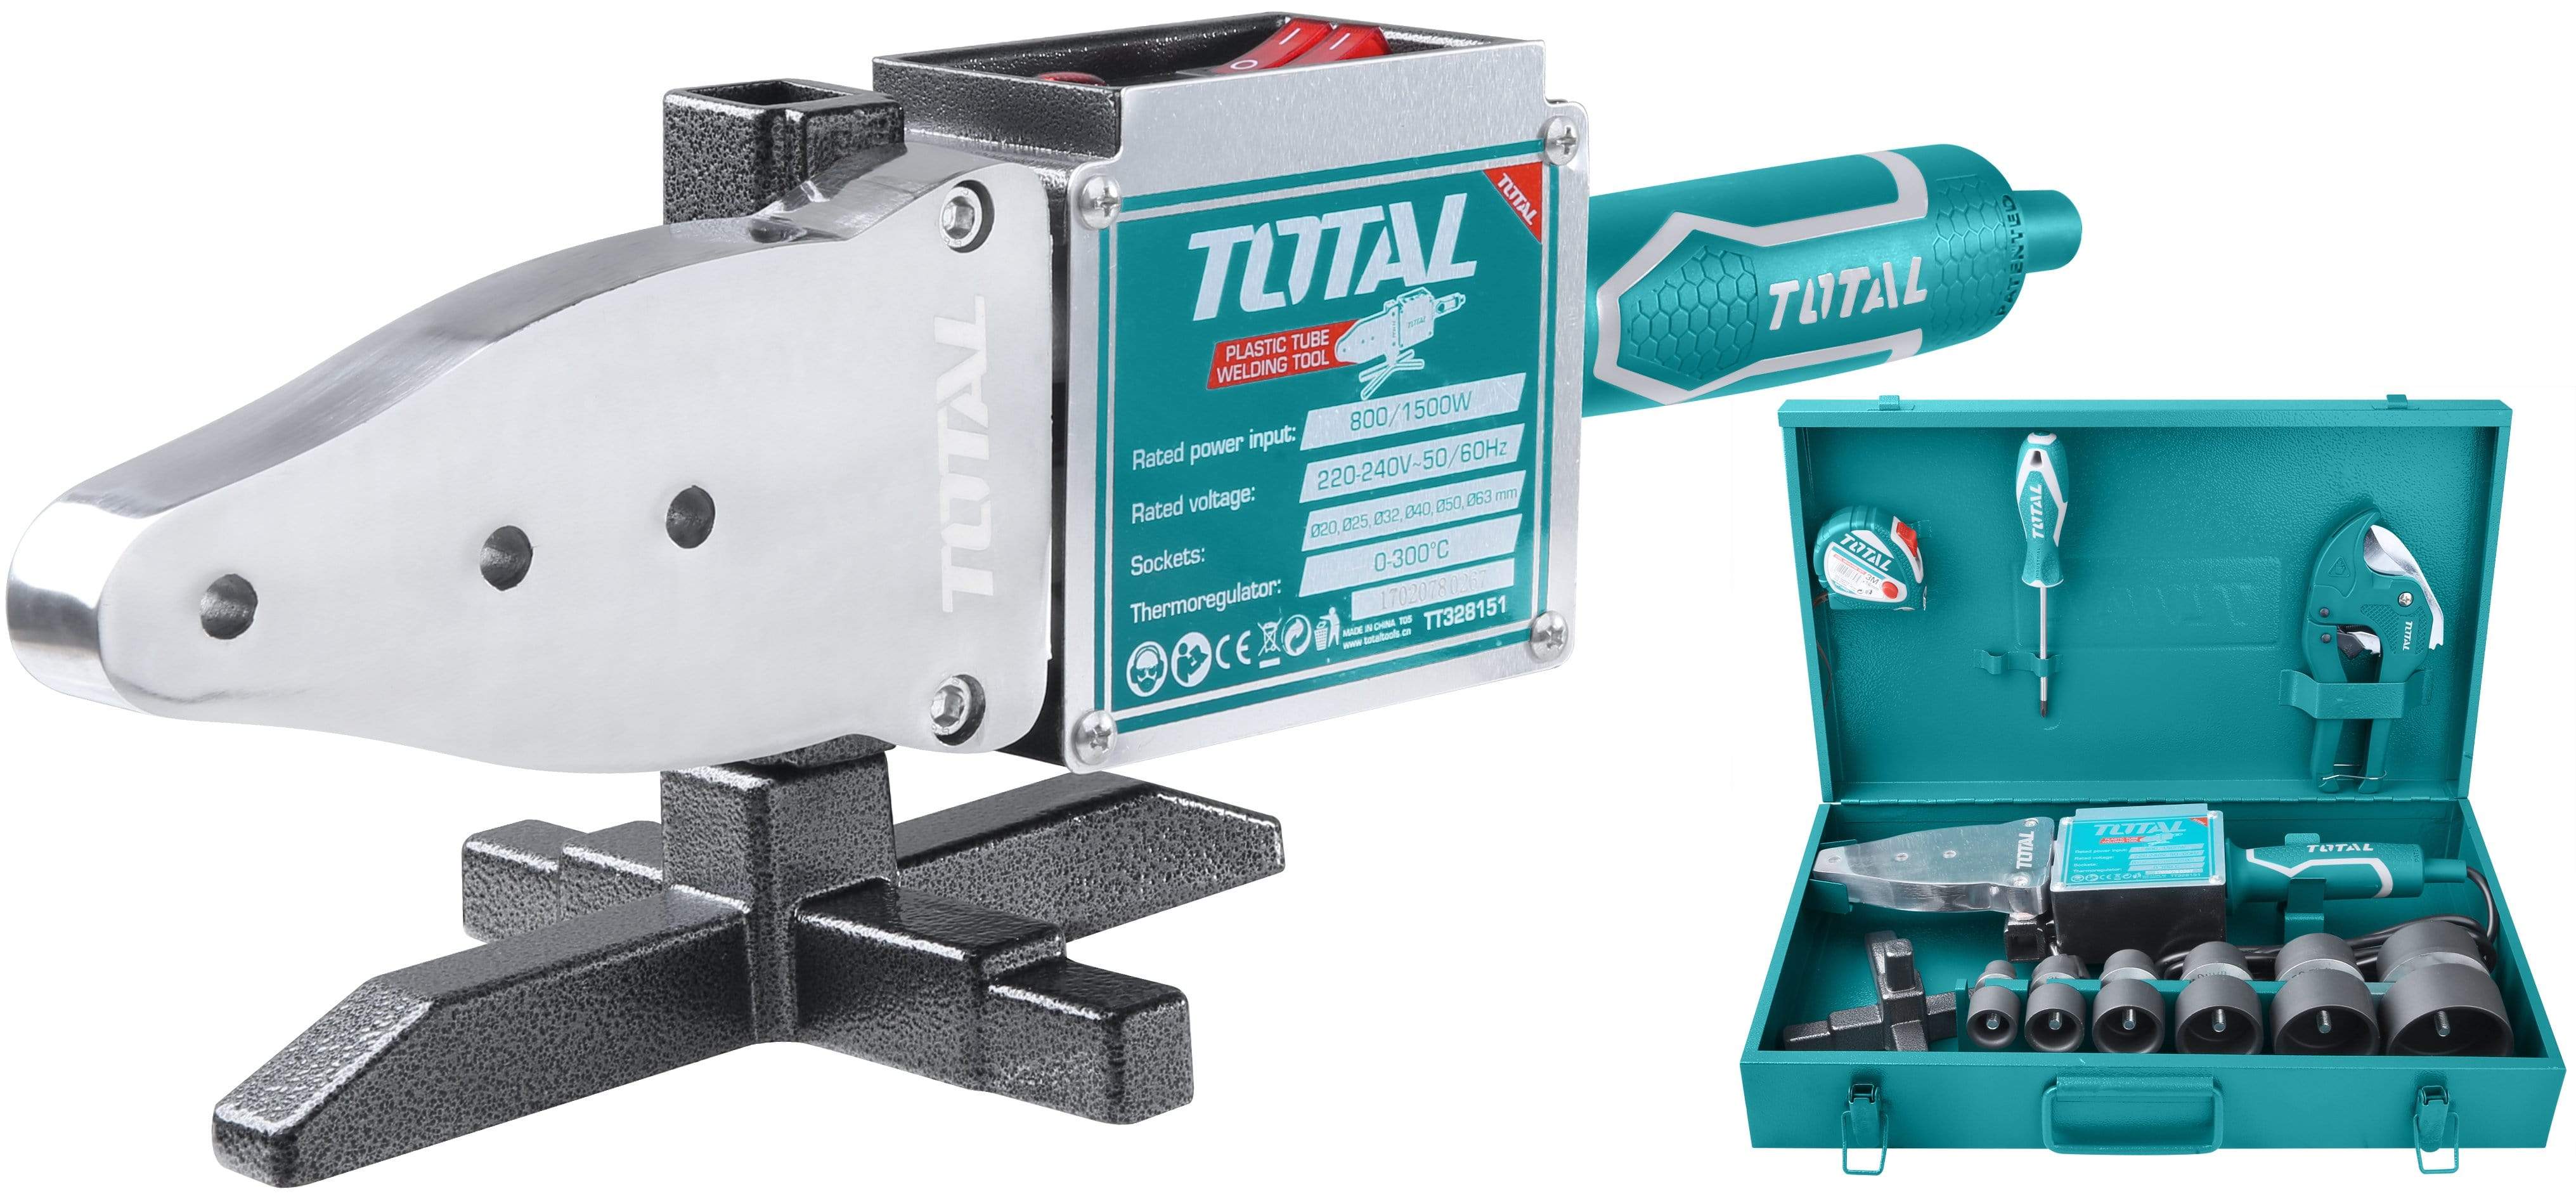 Total PPR - Plastic Tube Welding Tool 800W/1500W - TT328151